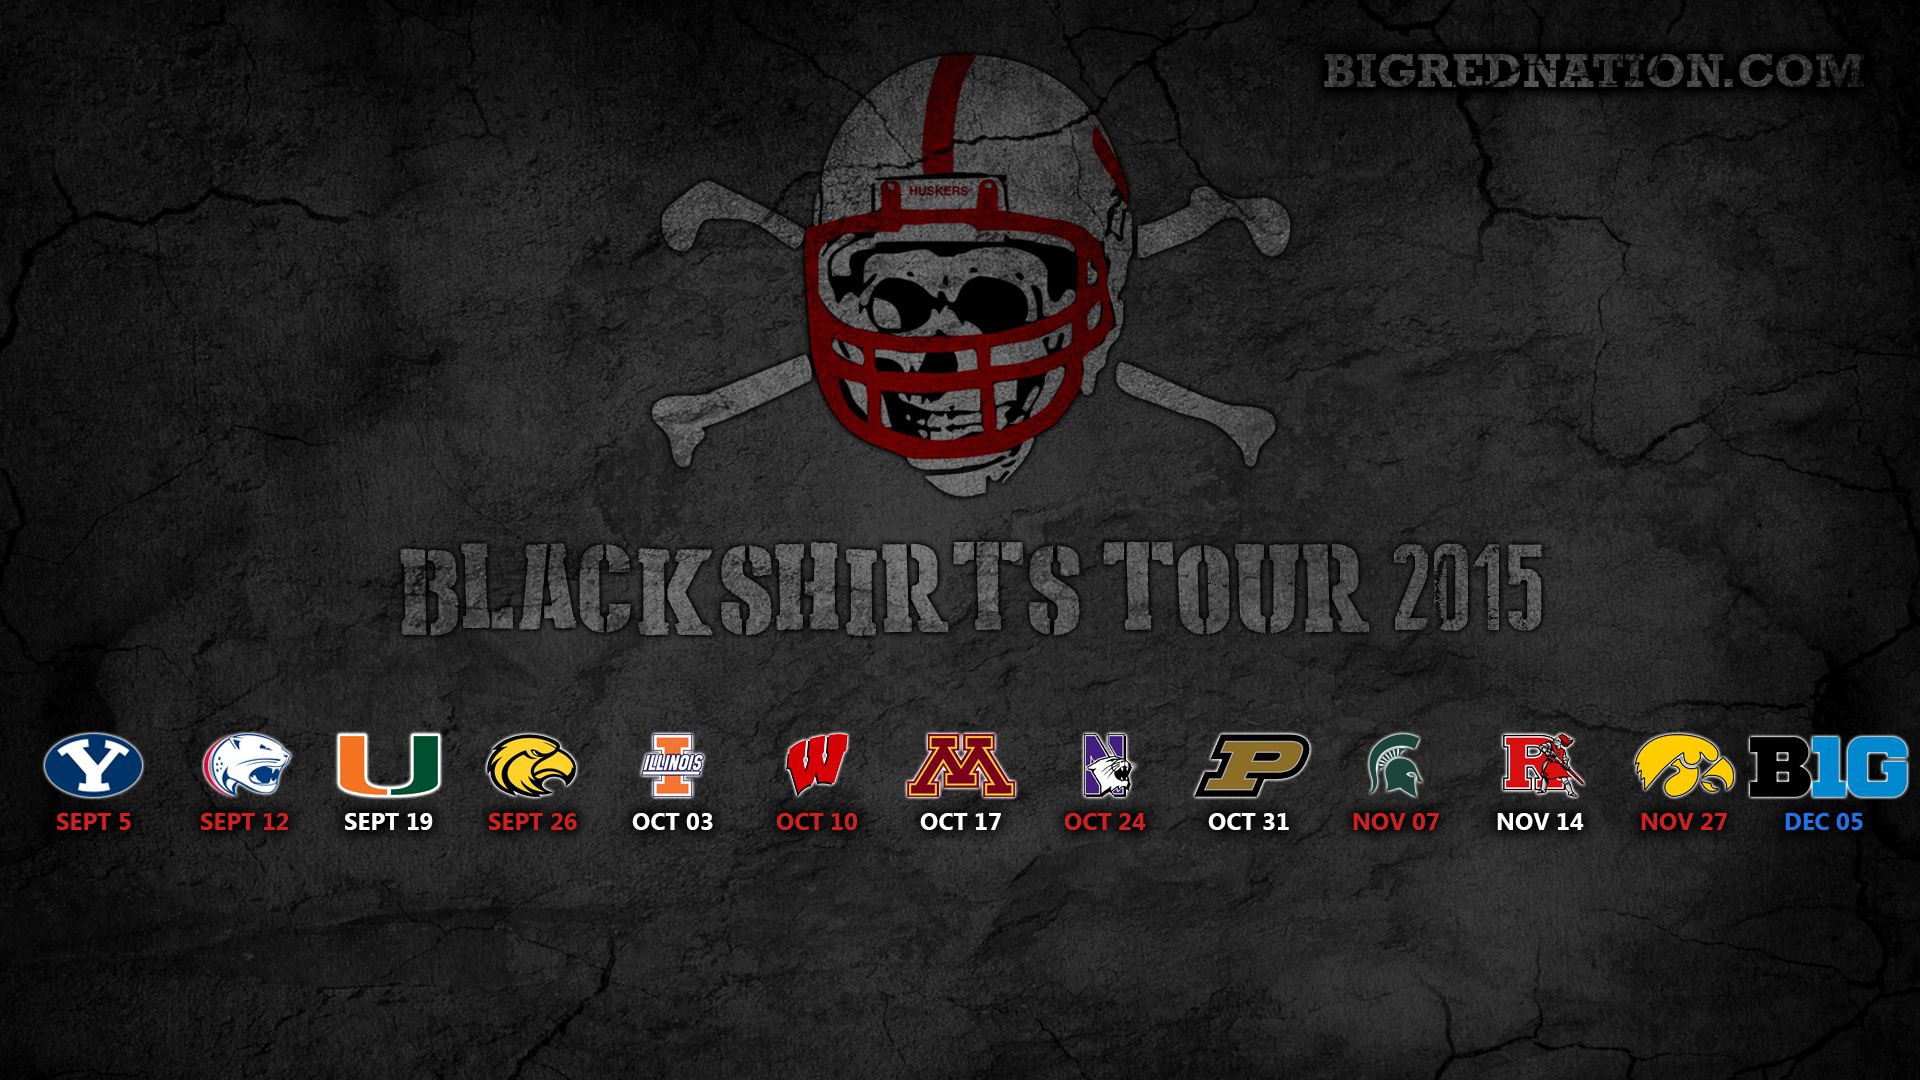 2015 Nebraska Blackshirts Tour Schedule Big Red Nation